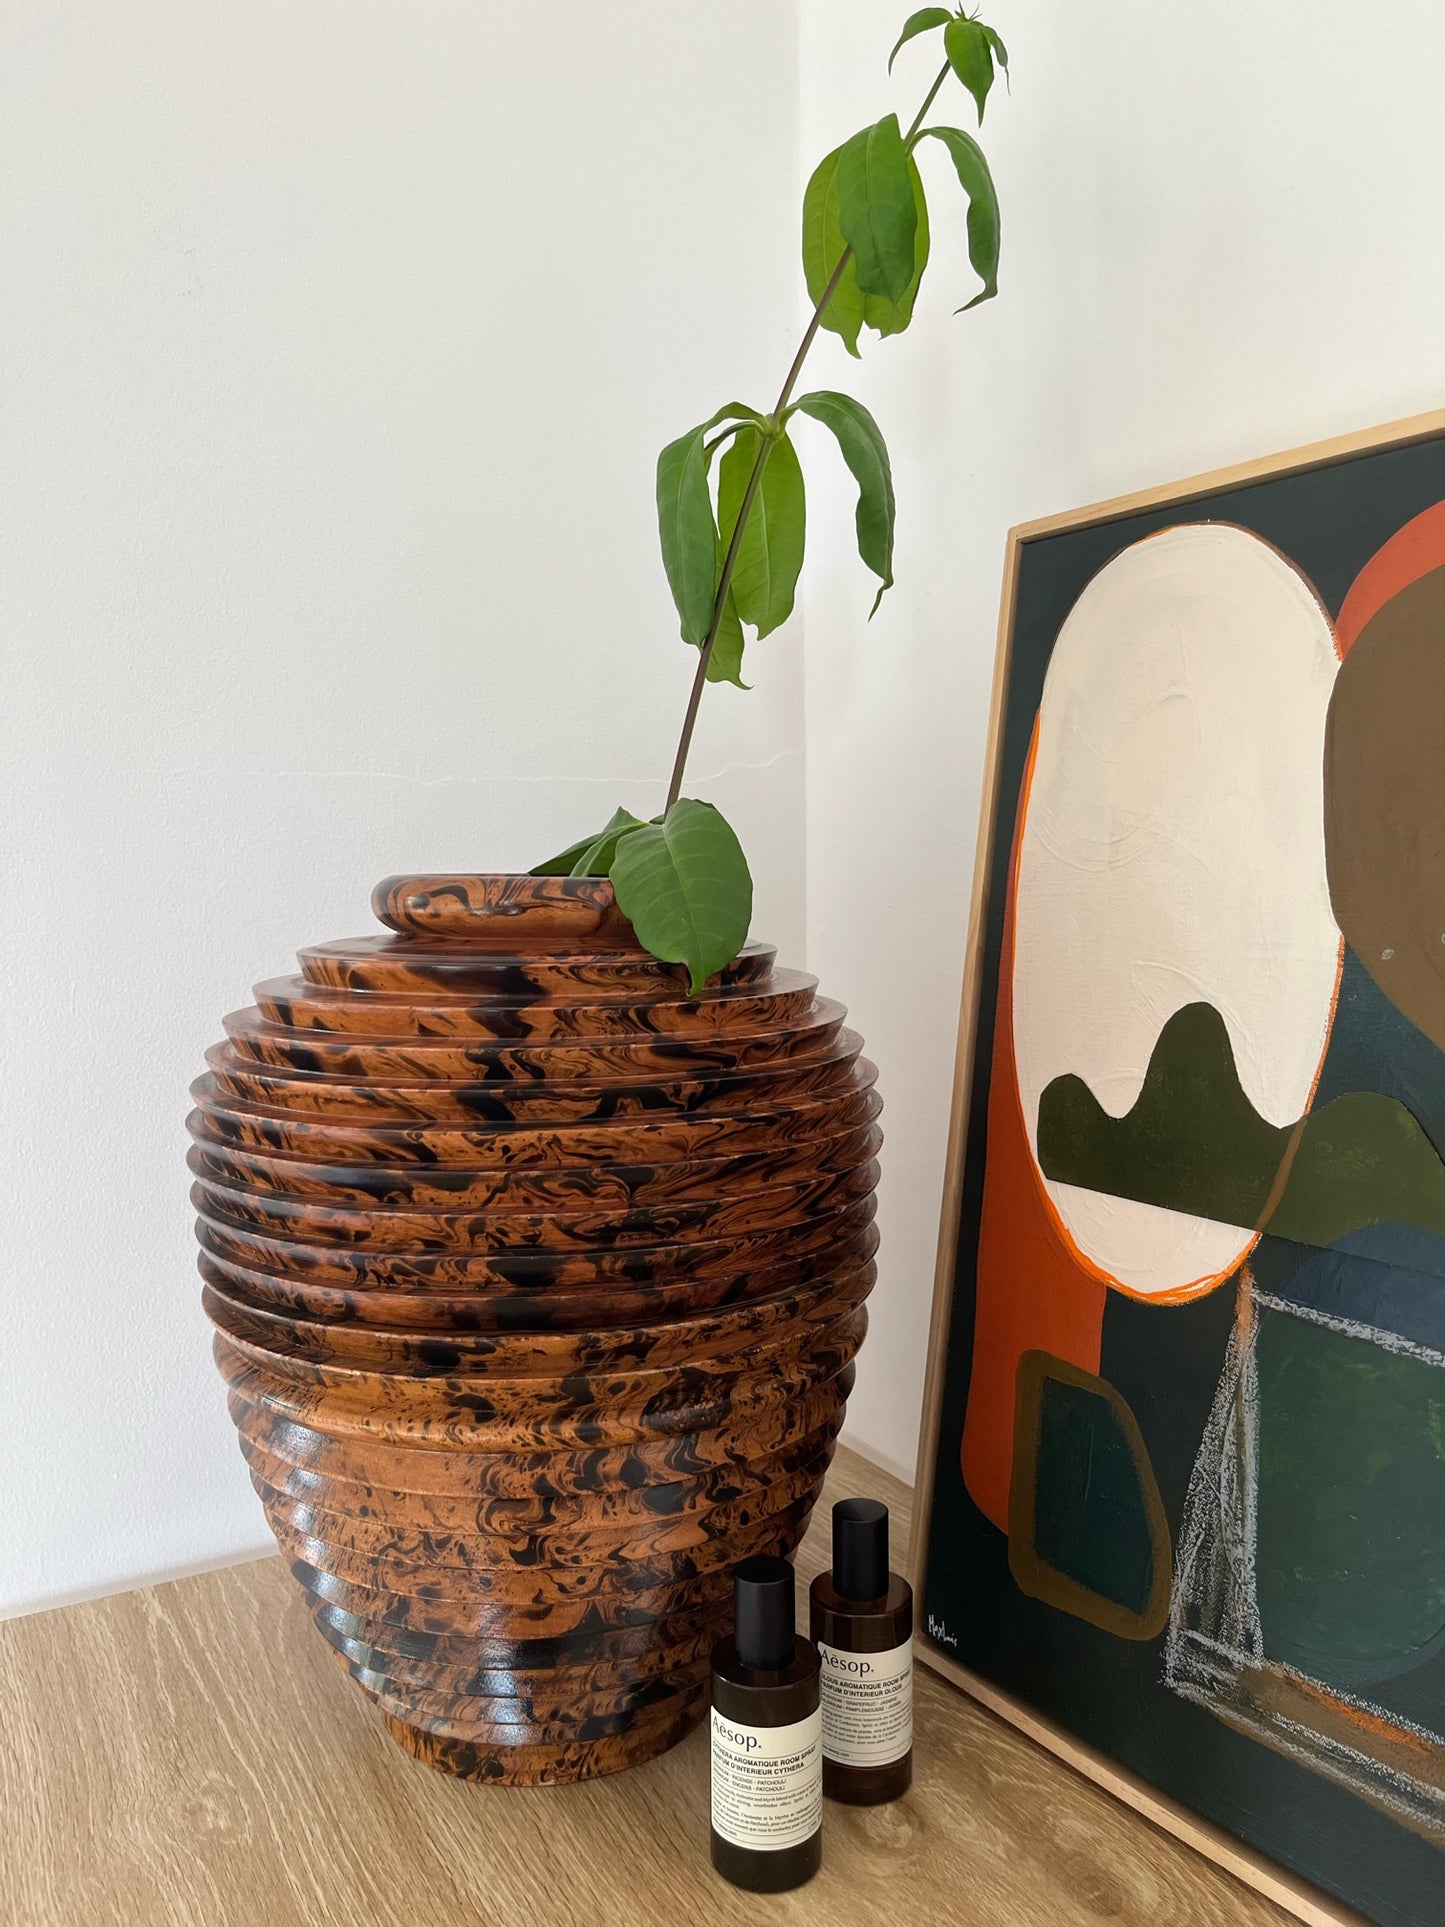 - Vintage Turned Burl Wood Vase/Urn